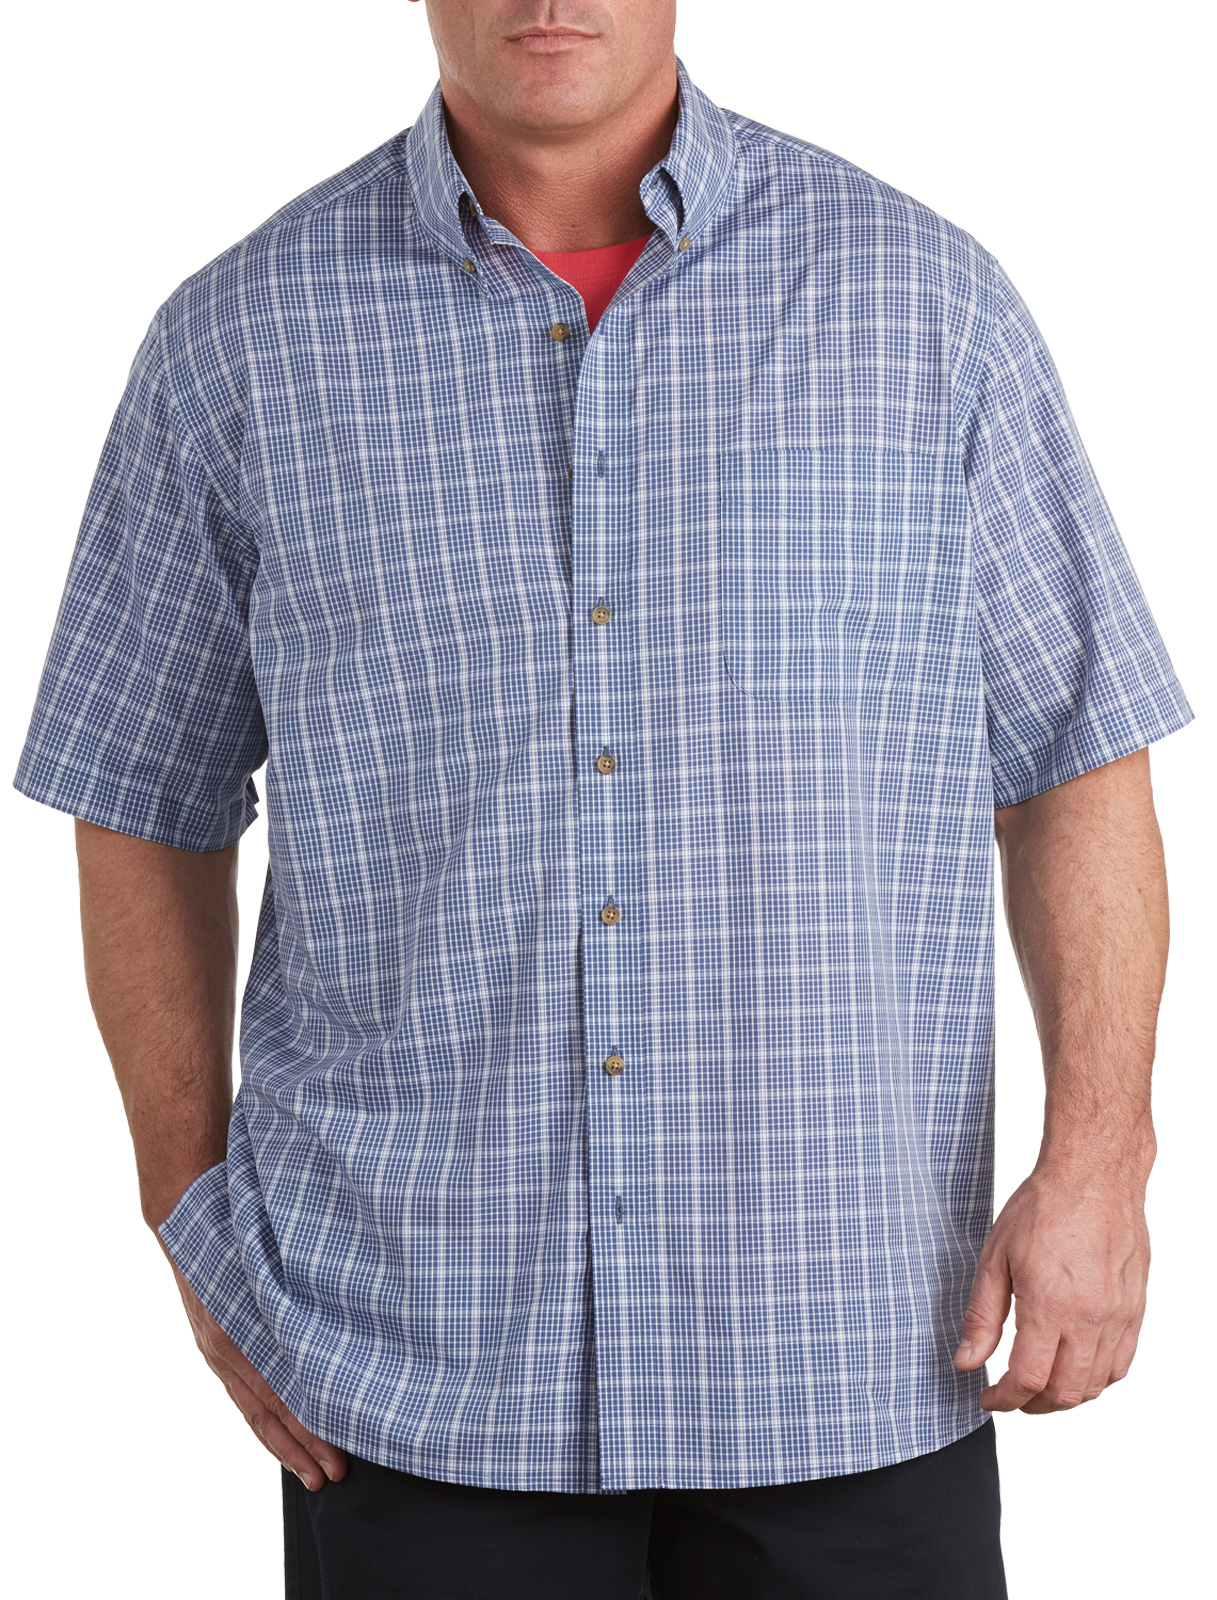 Harbor Bay Short-Sleeve Easy-Care Medium Plaid Sport Shirt